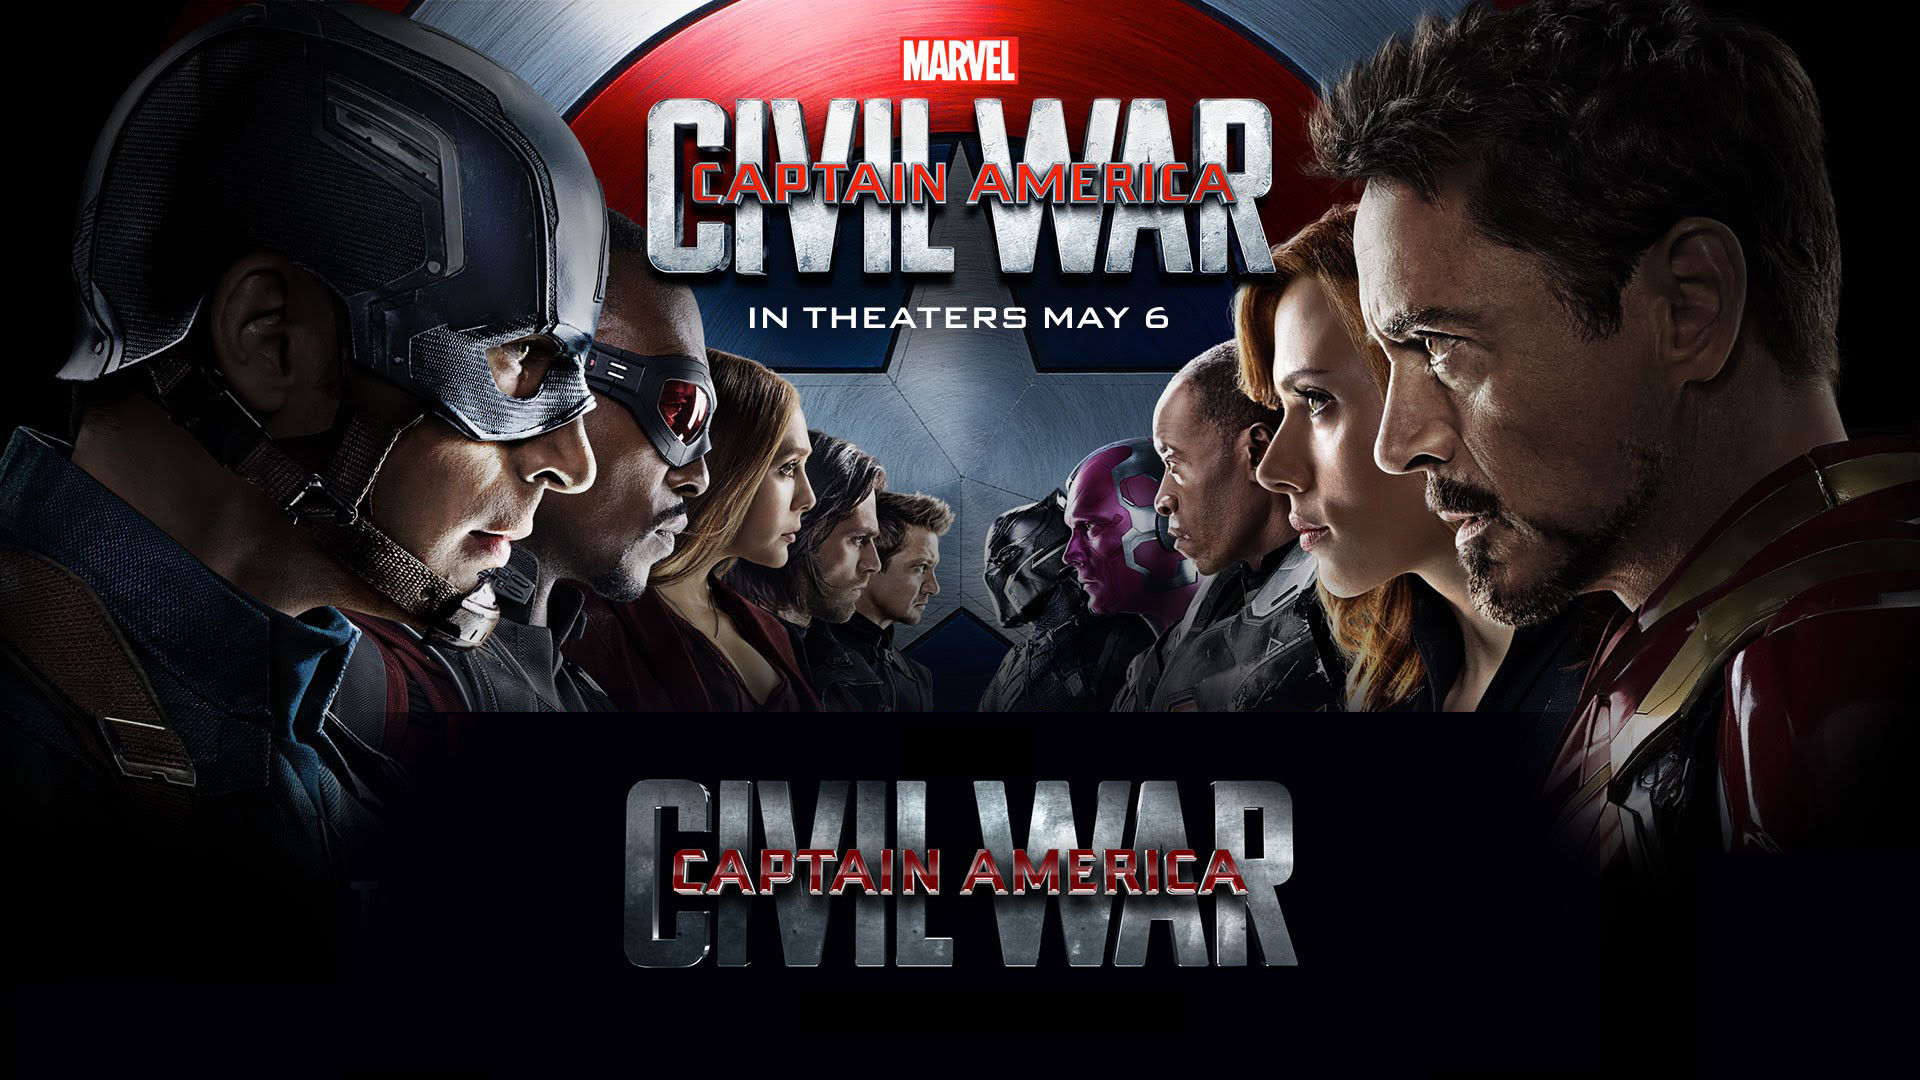 1920x1080 Captain America: Civil War widescreen wallpapers Captain America: Civil War  Pictures